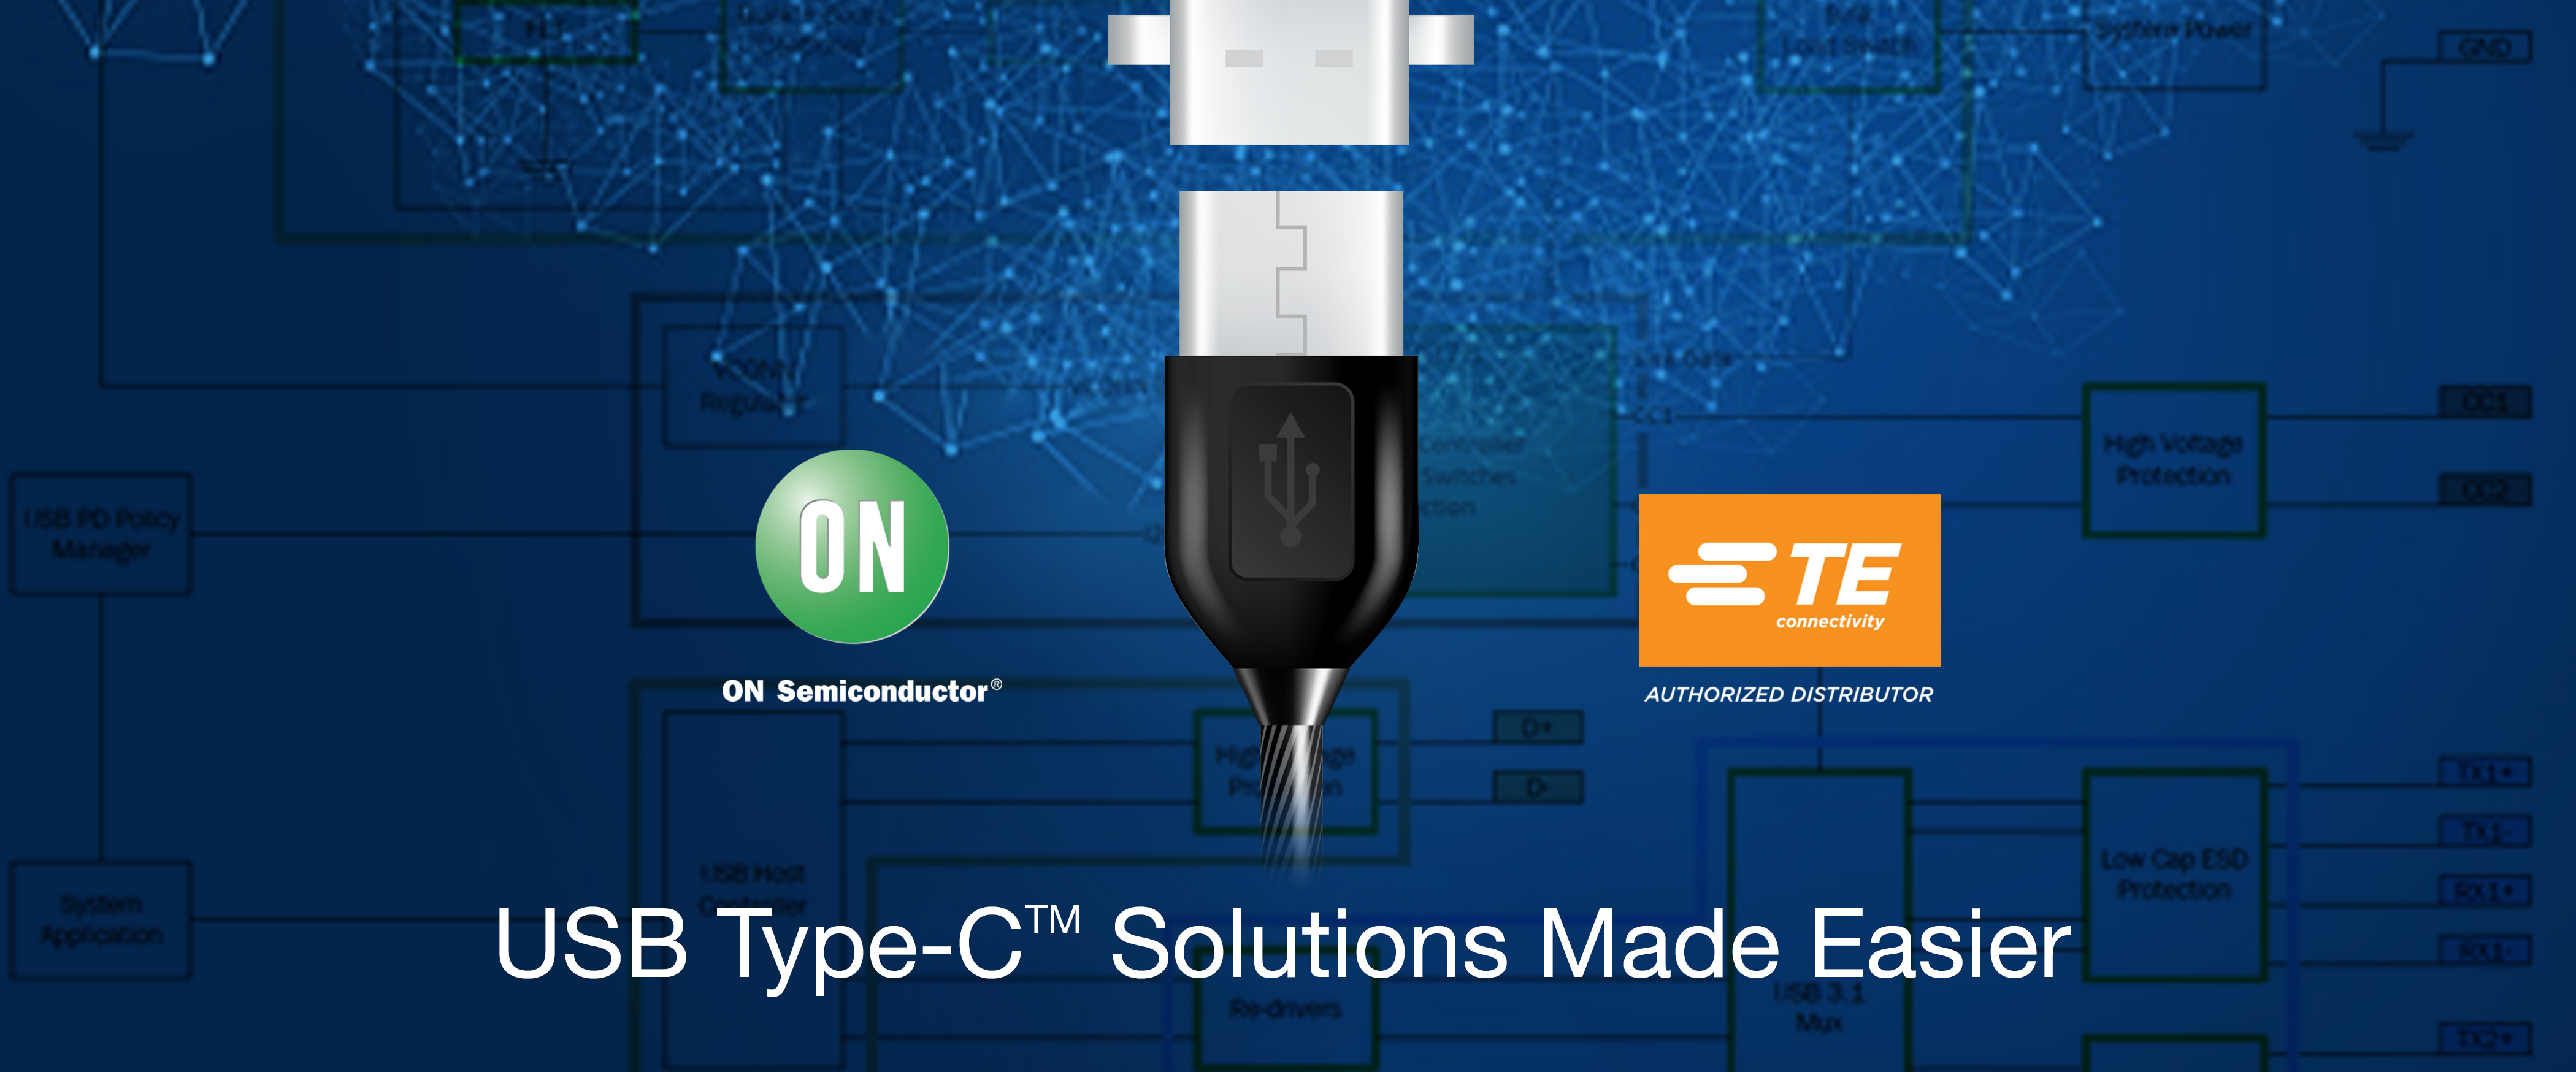 Mouser Announces New USB Type-C Solution Page